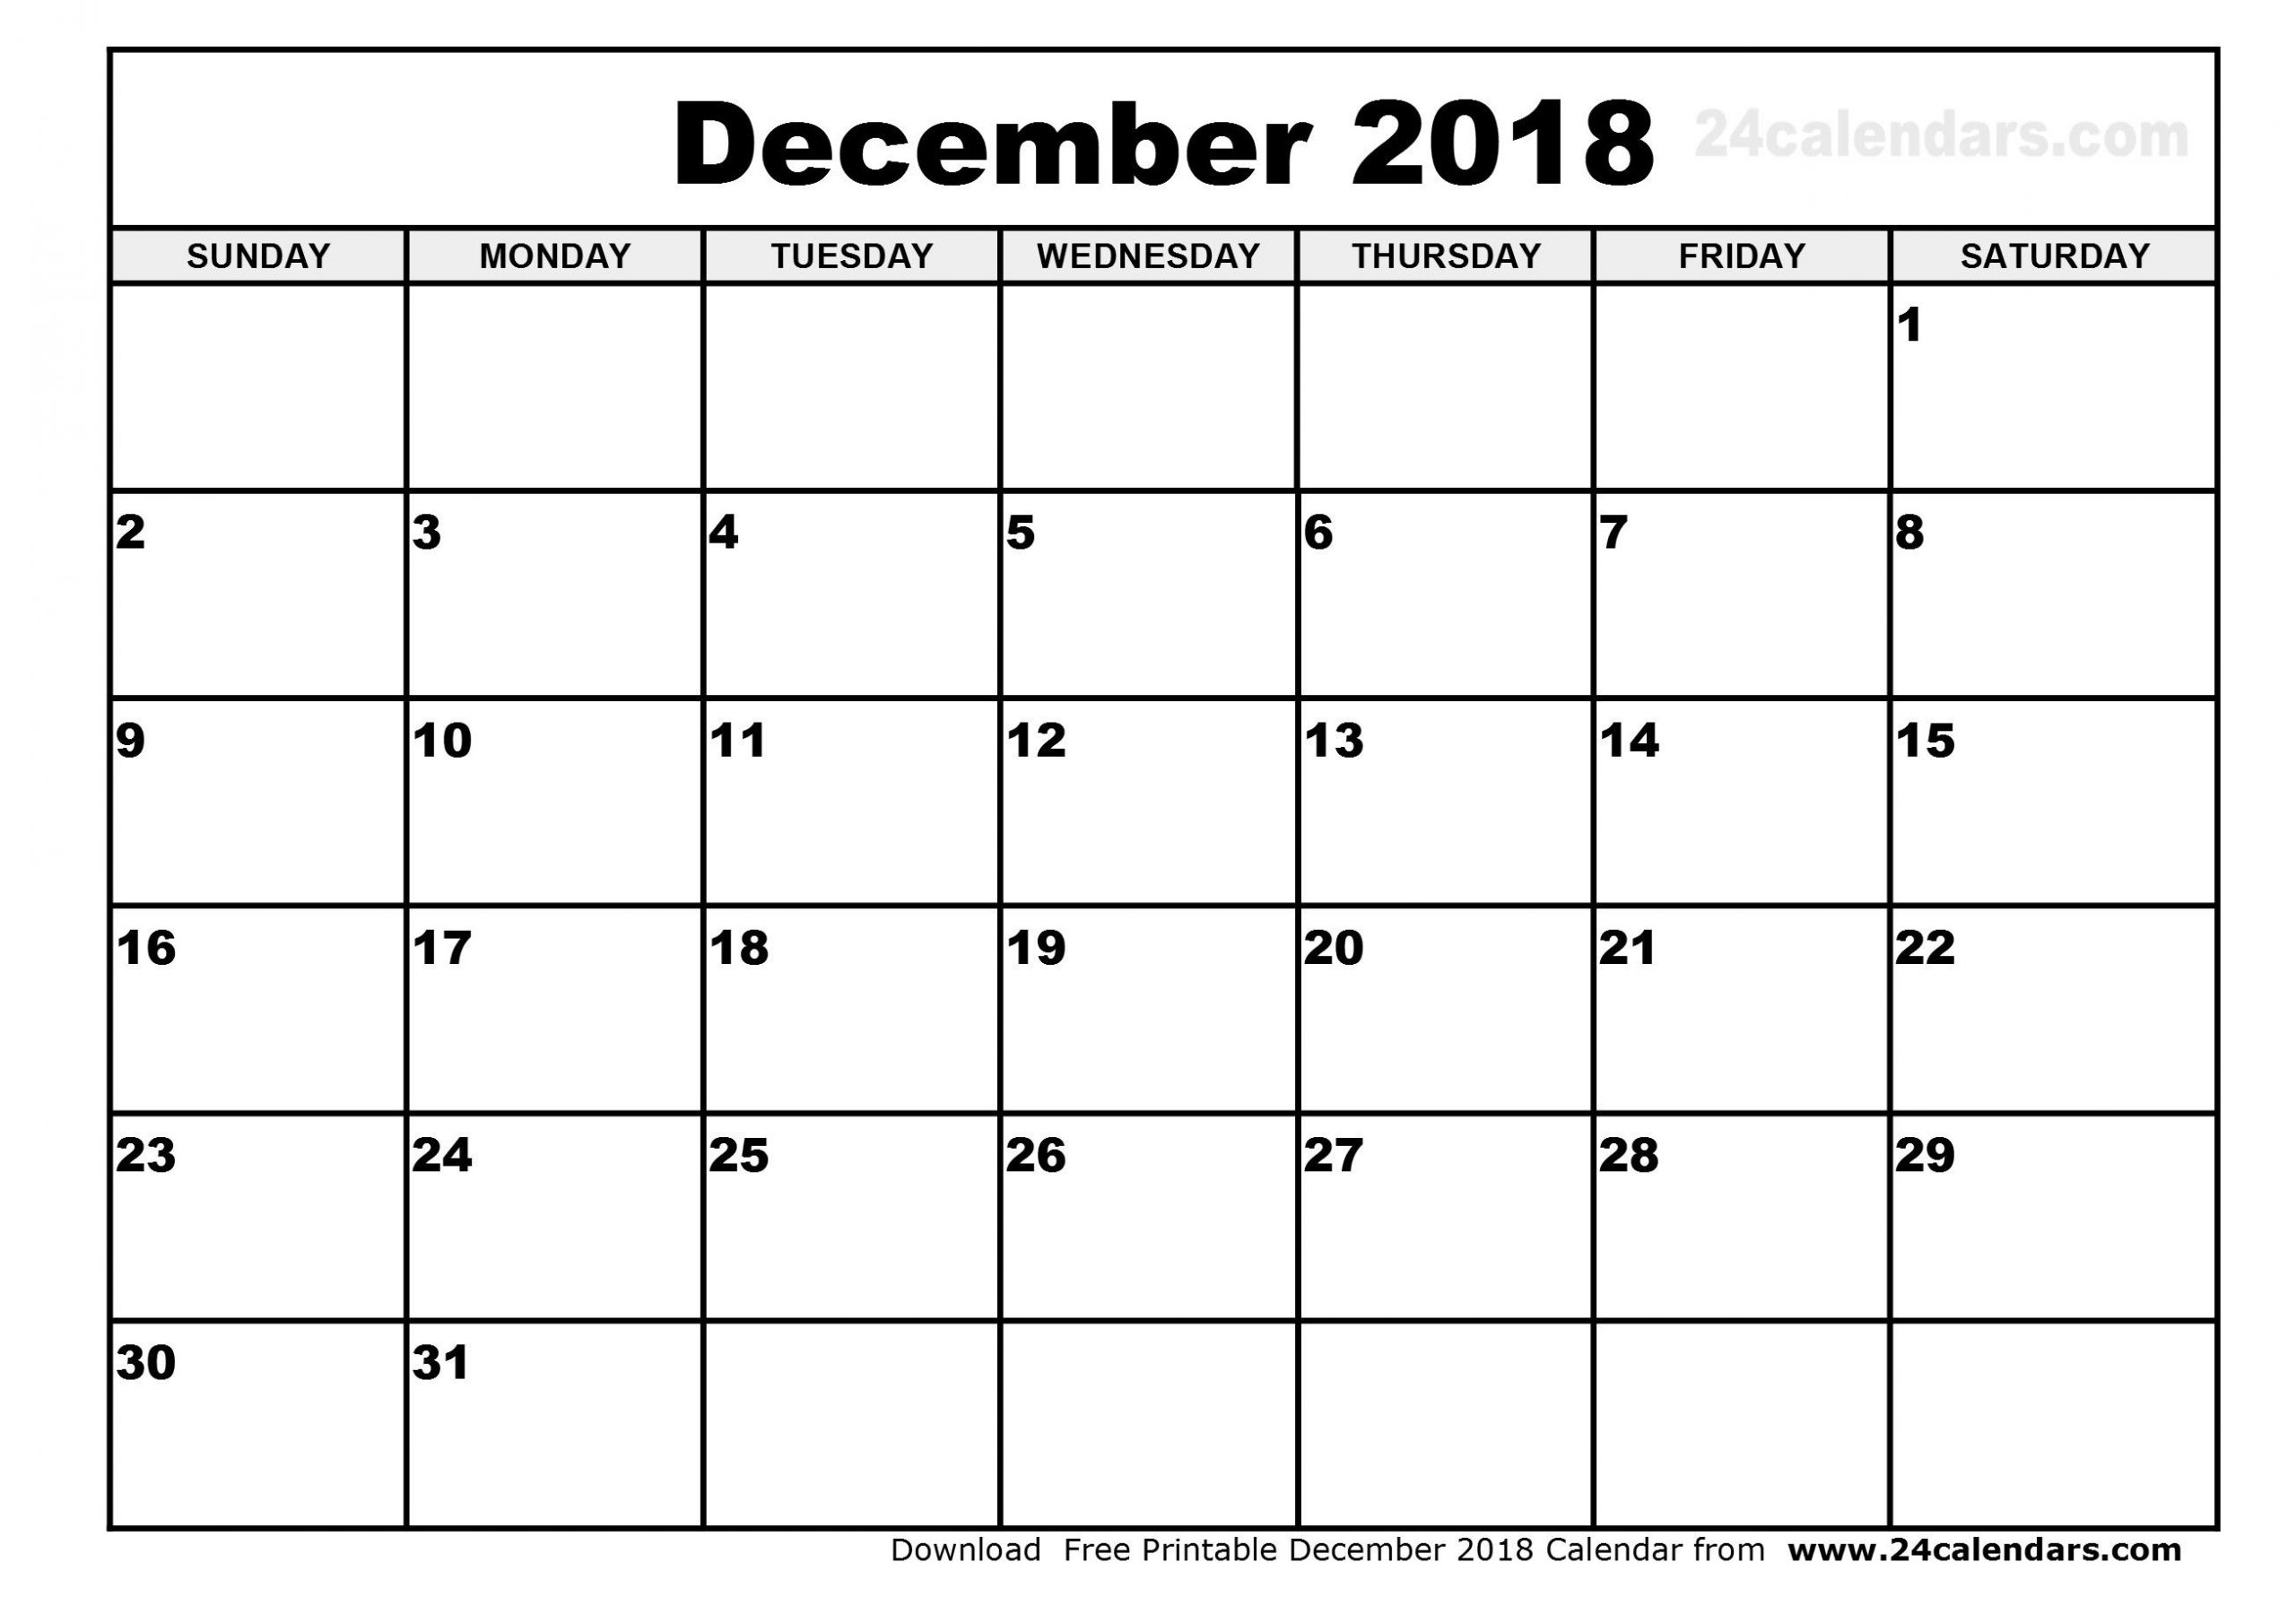 Monthly Calendars Monday Through Friday Calendar